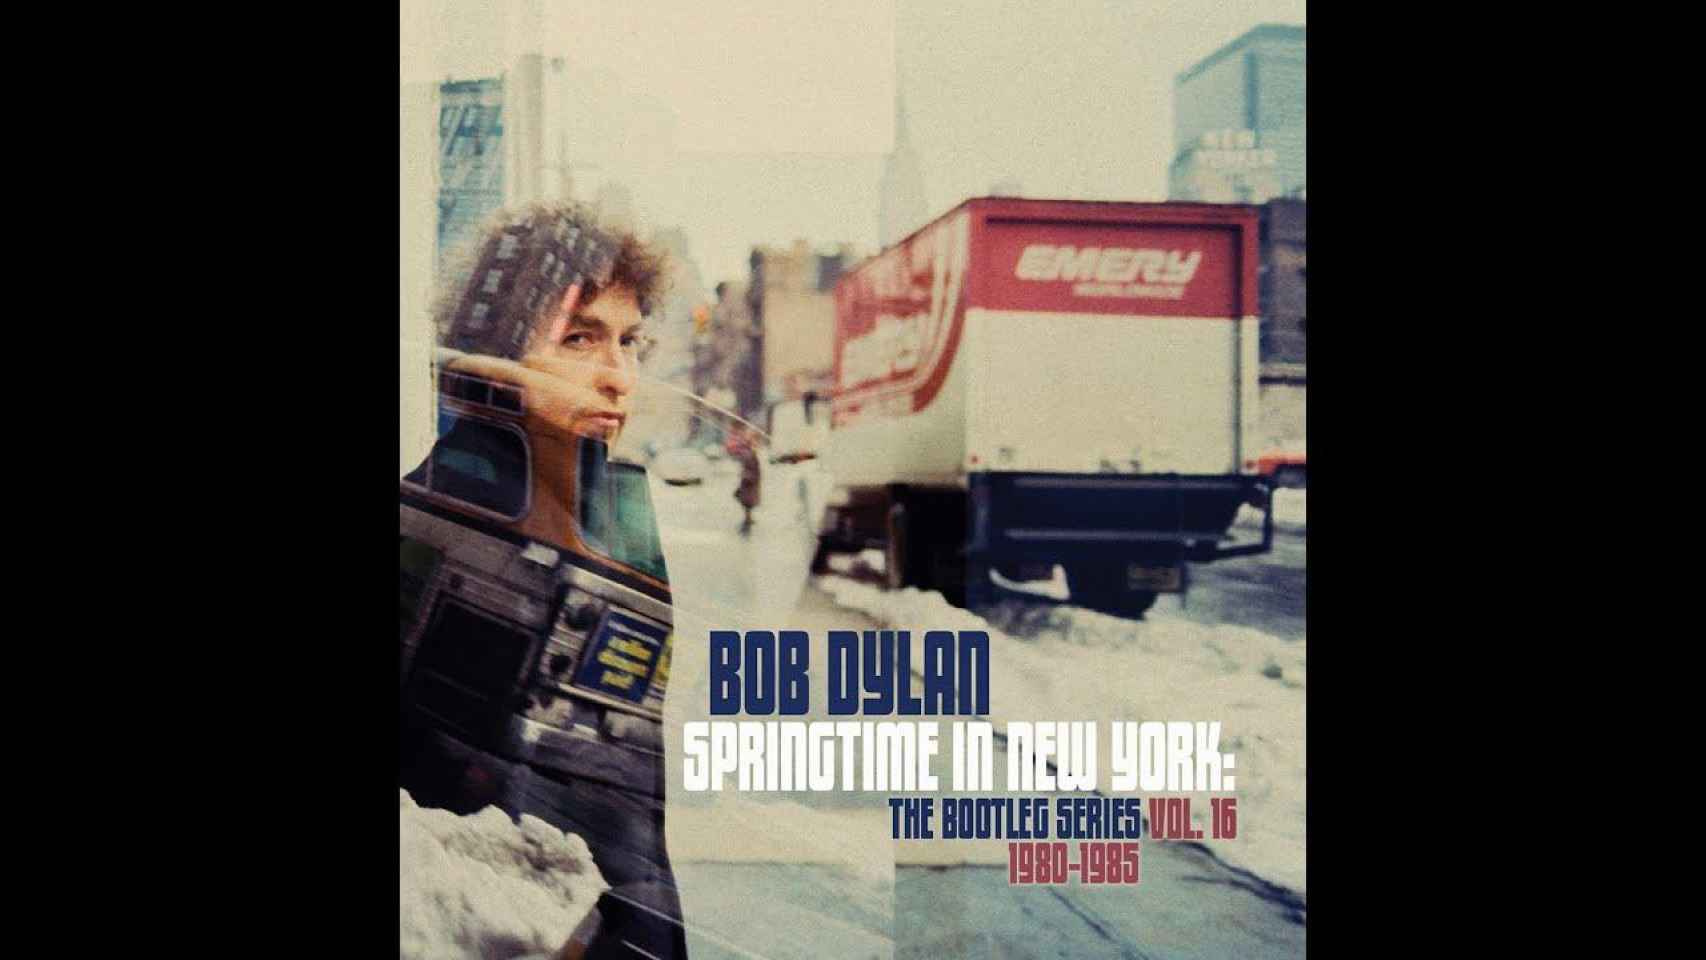 Portada de 'Springtime in New York (1980-1985)', el volumen 16 de 'The Bootleg Series' de Bob Dylan